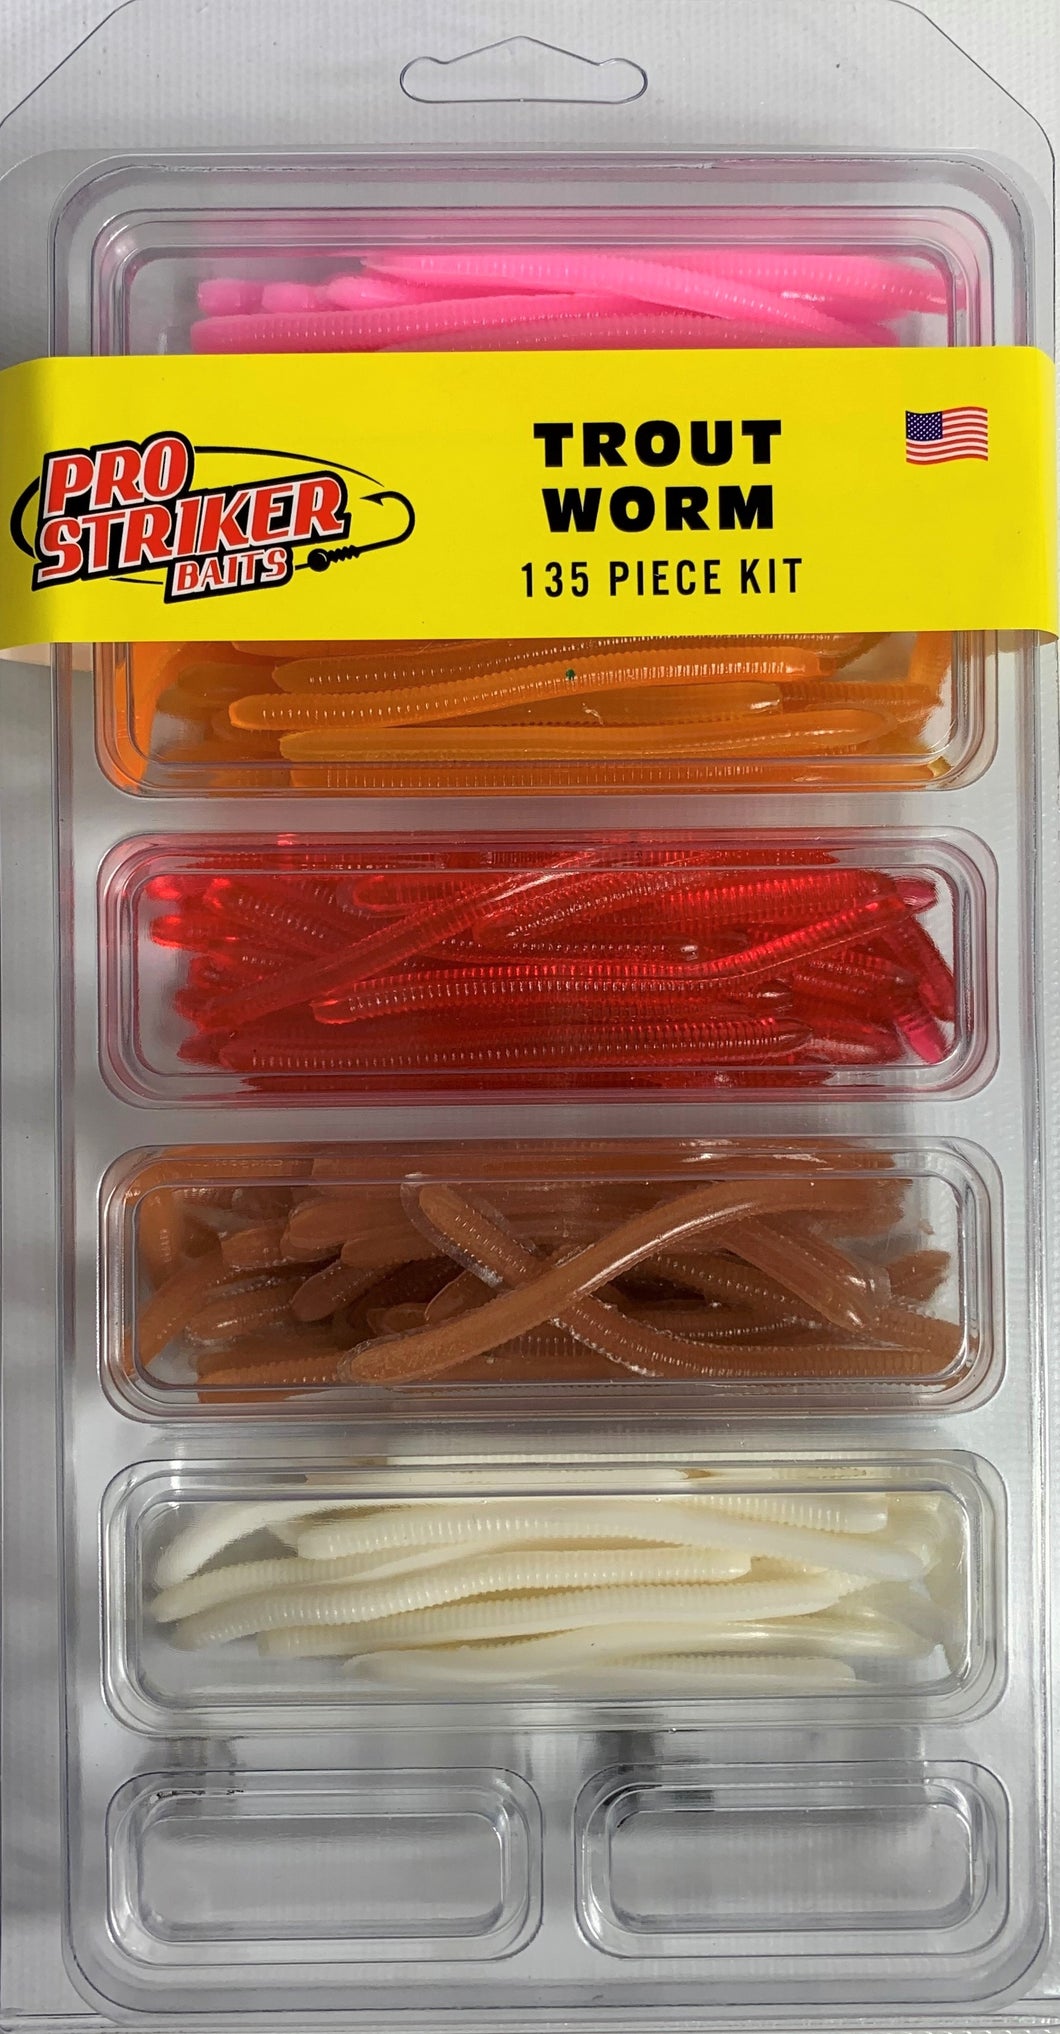 Pro Striker Trout Worm 135 Piece Kit